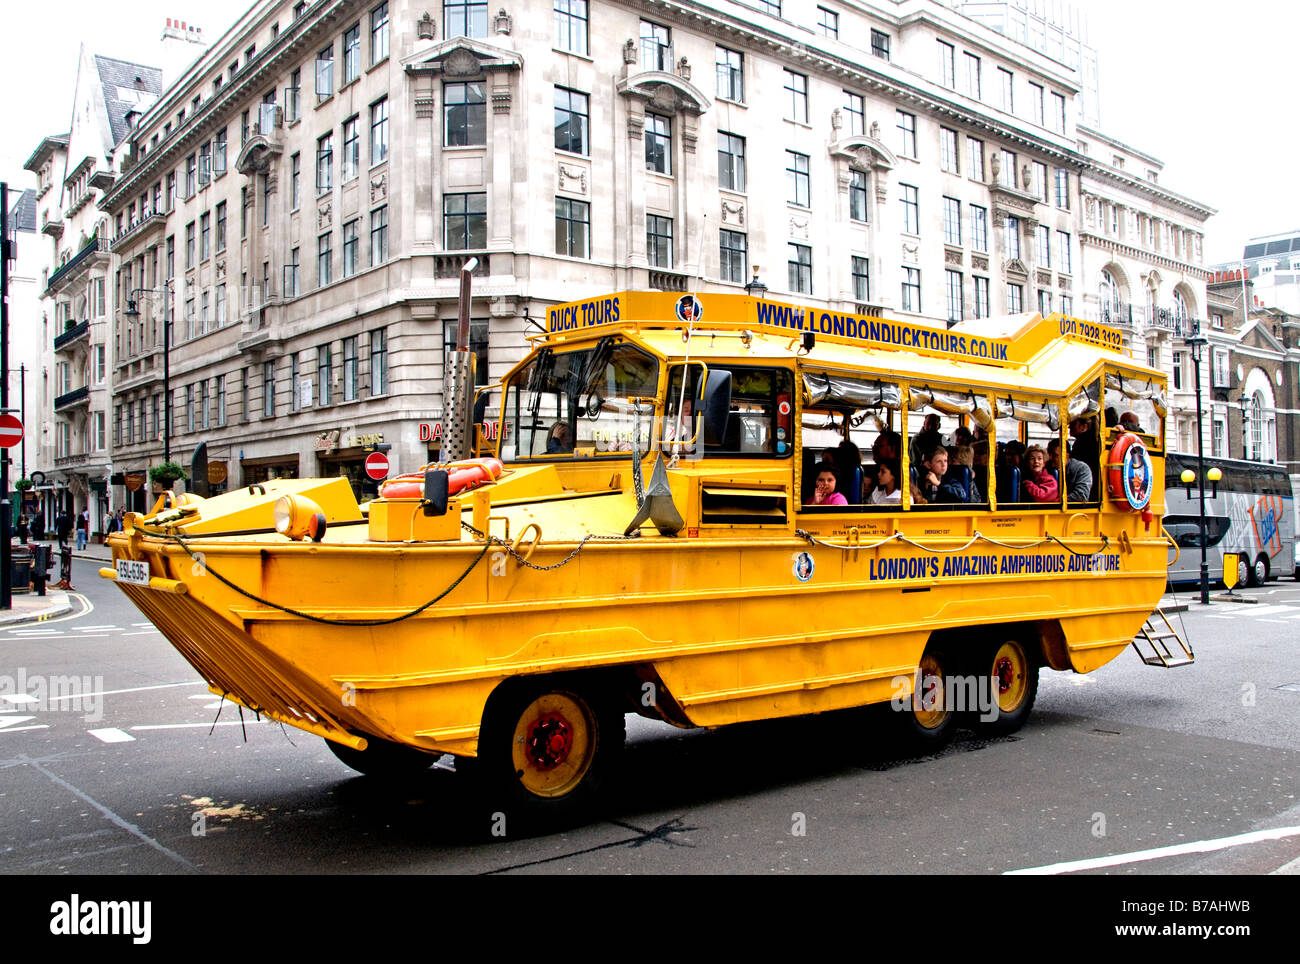 London duck tours amphibious vehicle Stock Photo